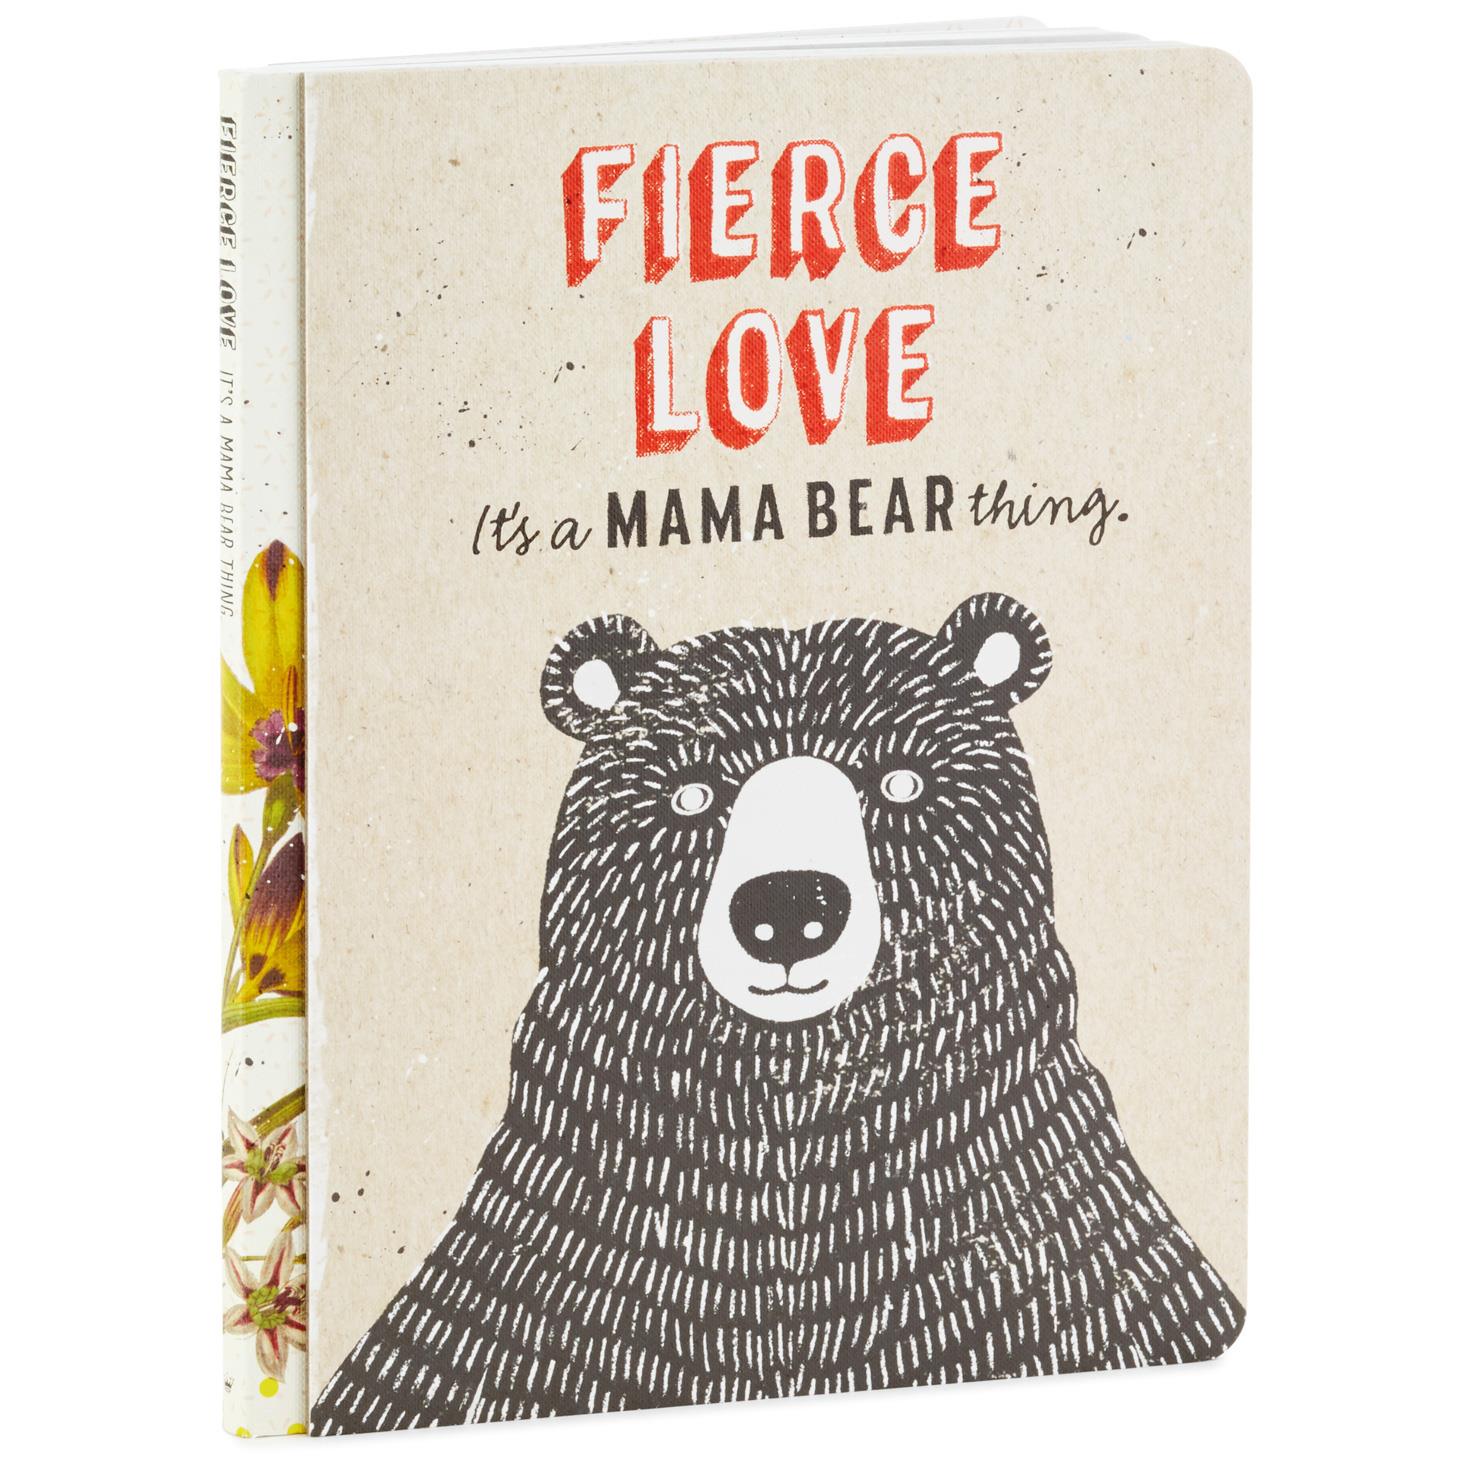 Fierce Love: It's a Mama Bear Thing Book - Gift Books